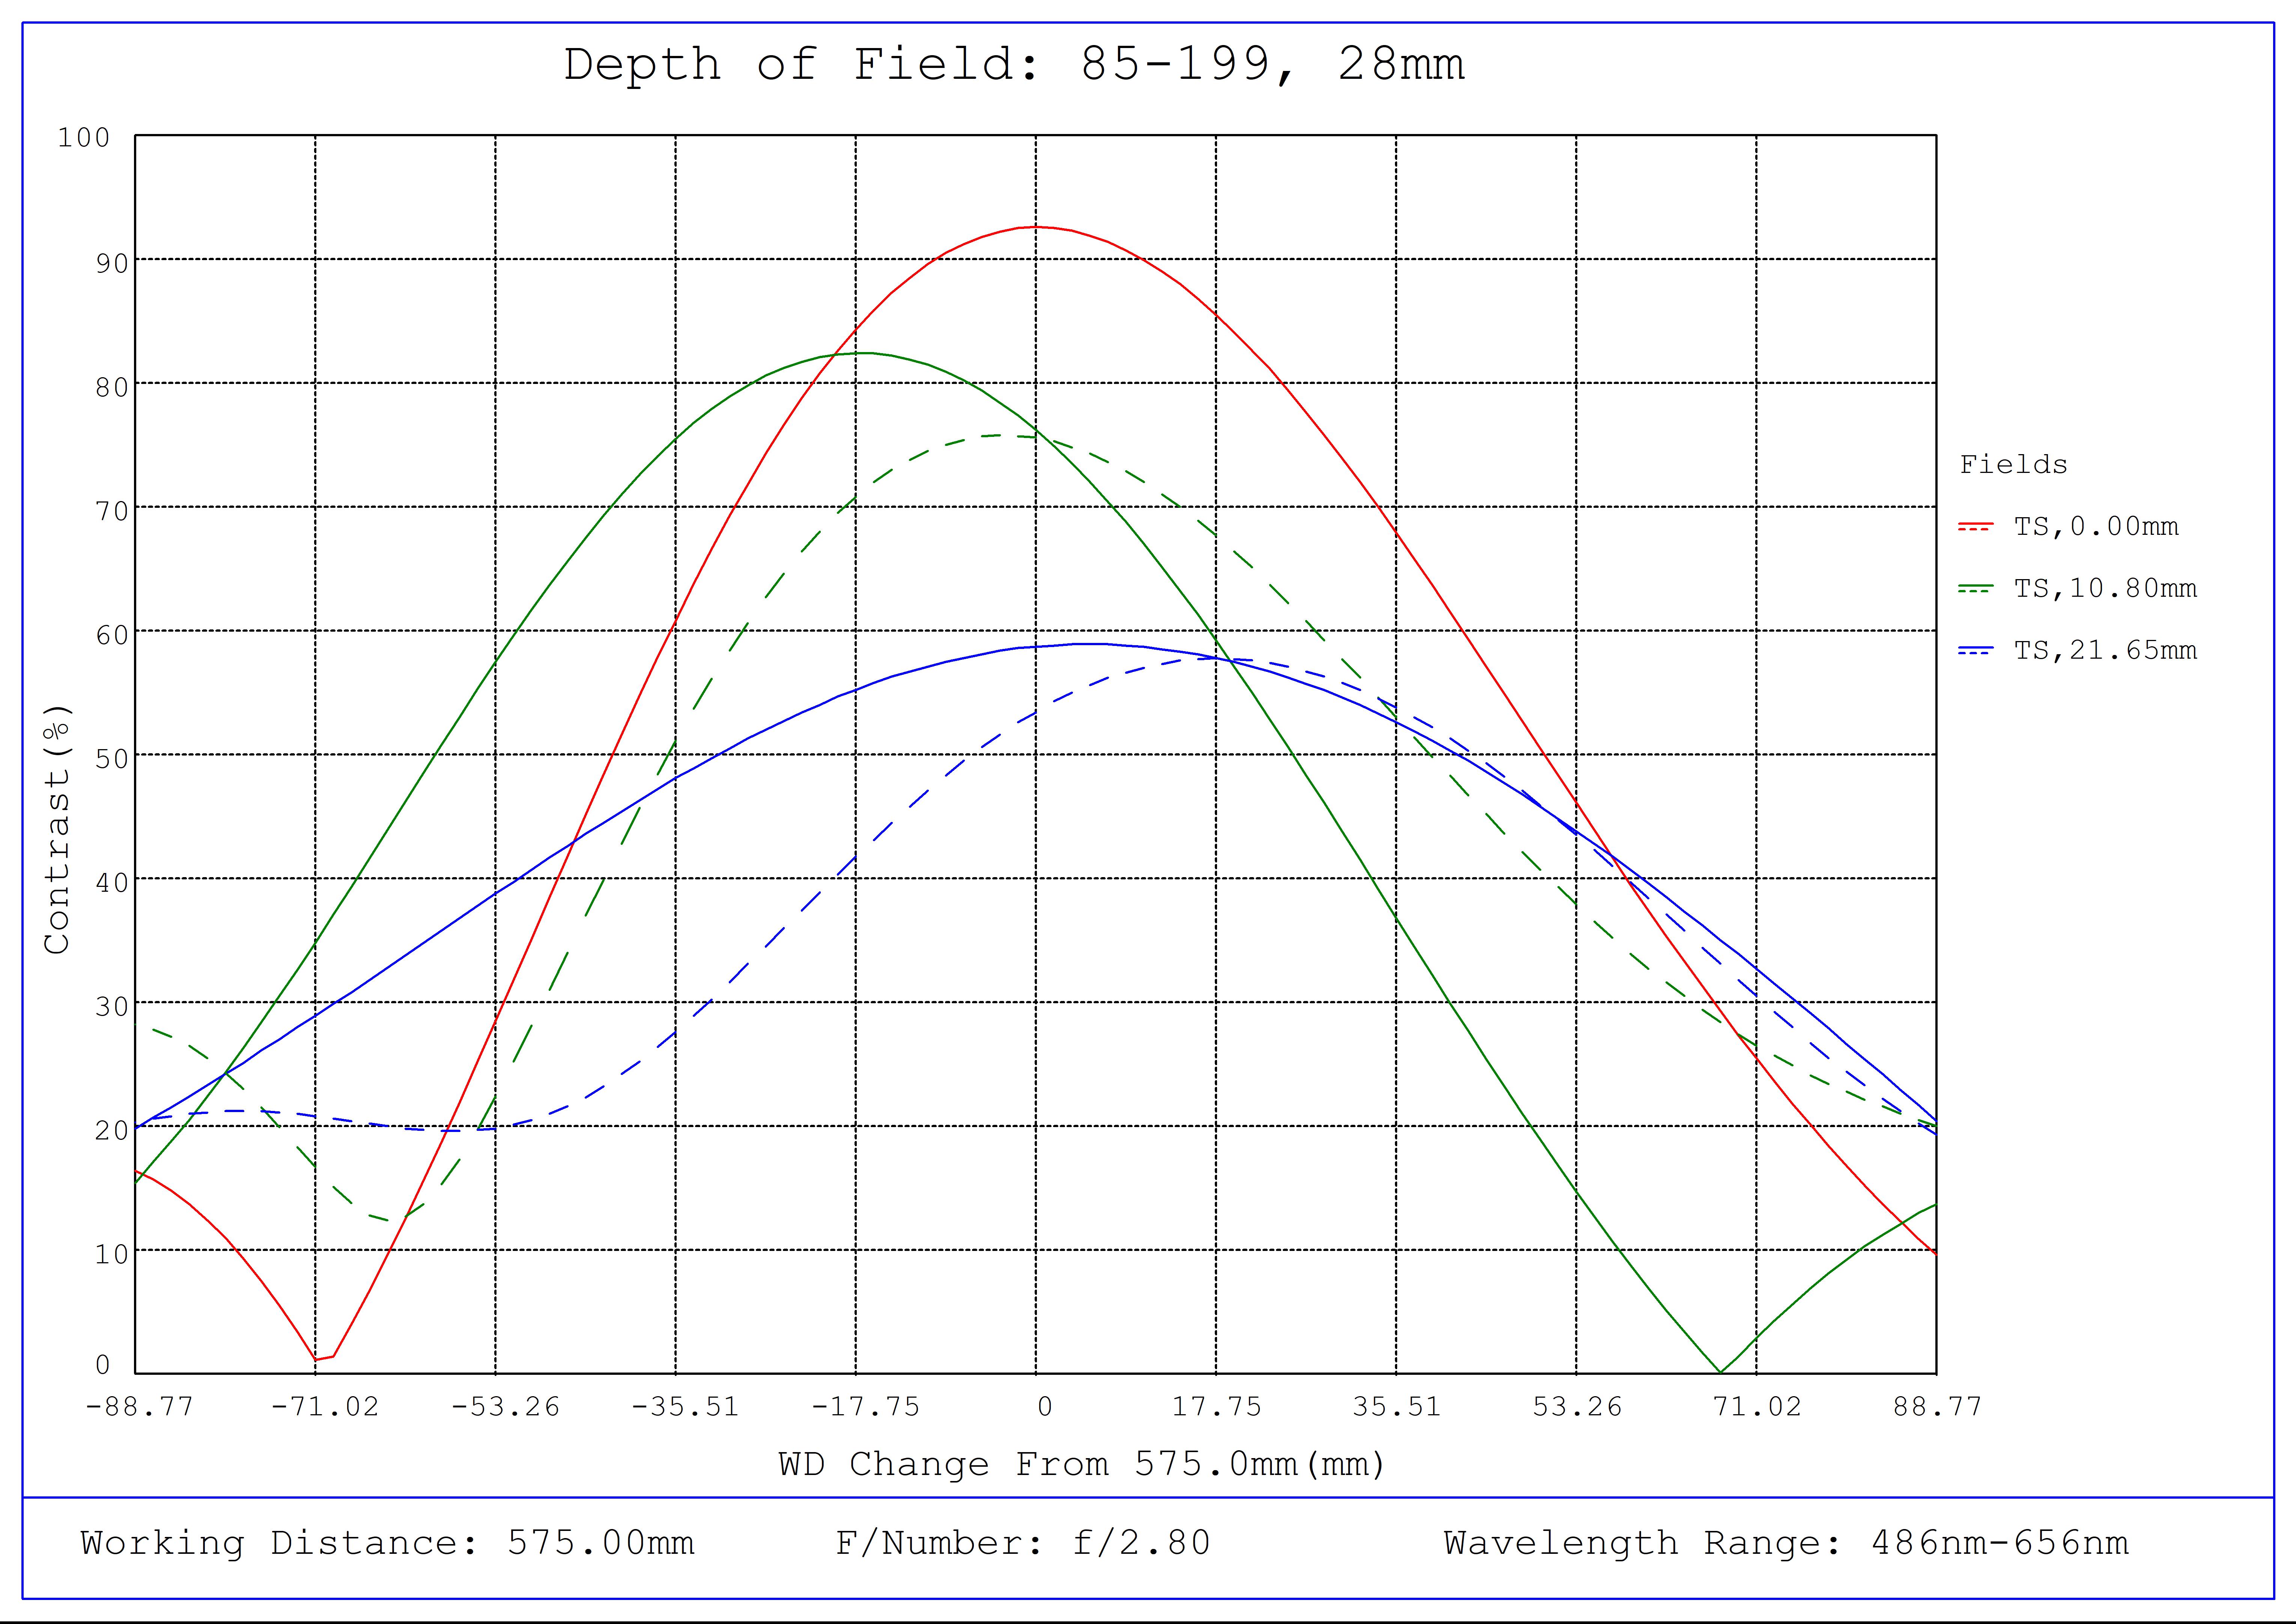 #85-199, 28mm Short Working Distance, LF Series Fixed Focal Length Lens, Depth of Field Plot, 575mm Working Distance, f2.8